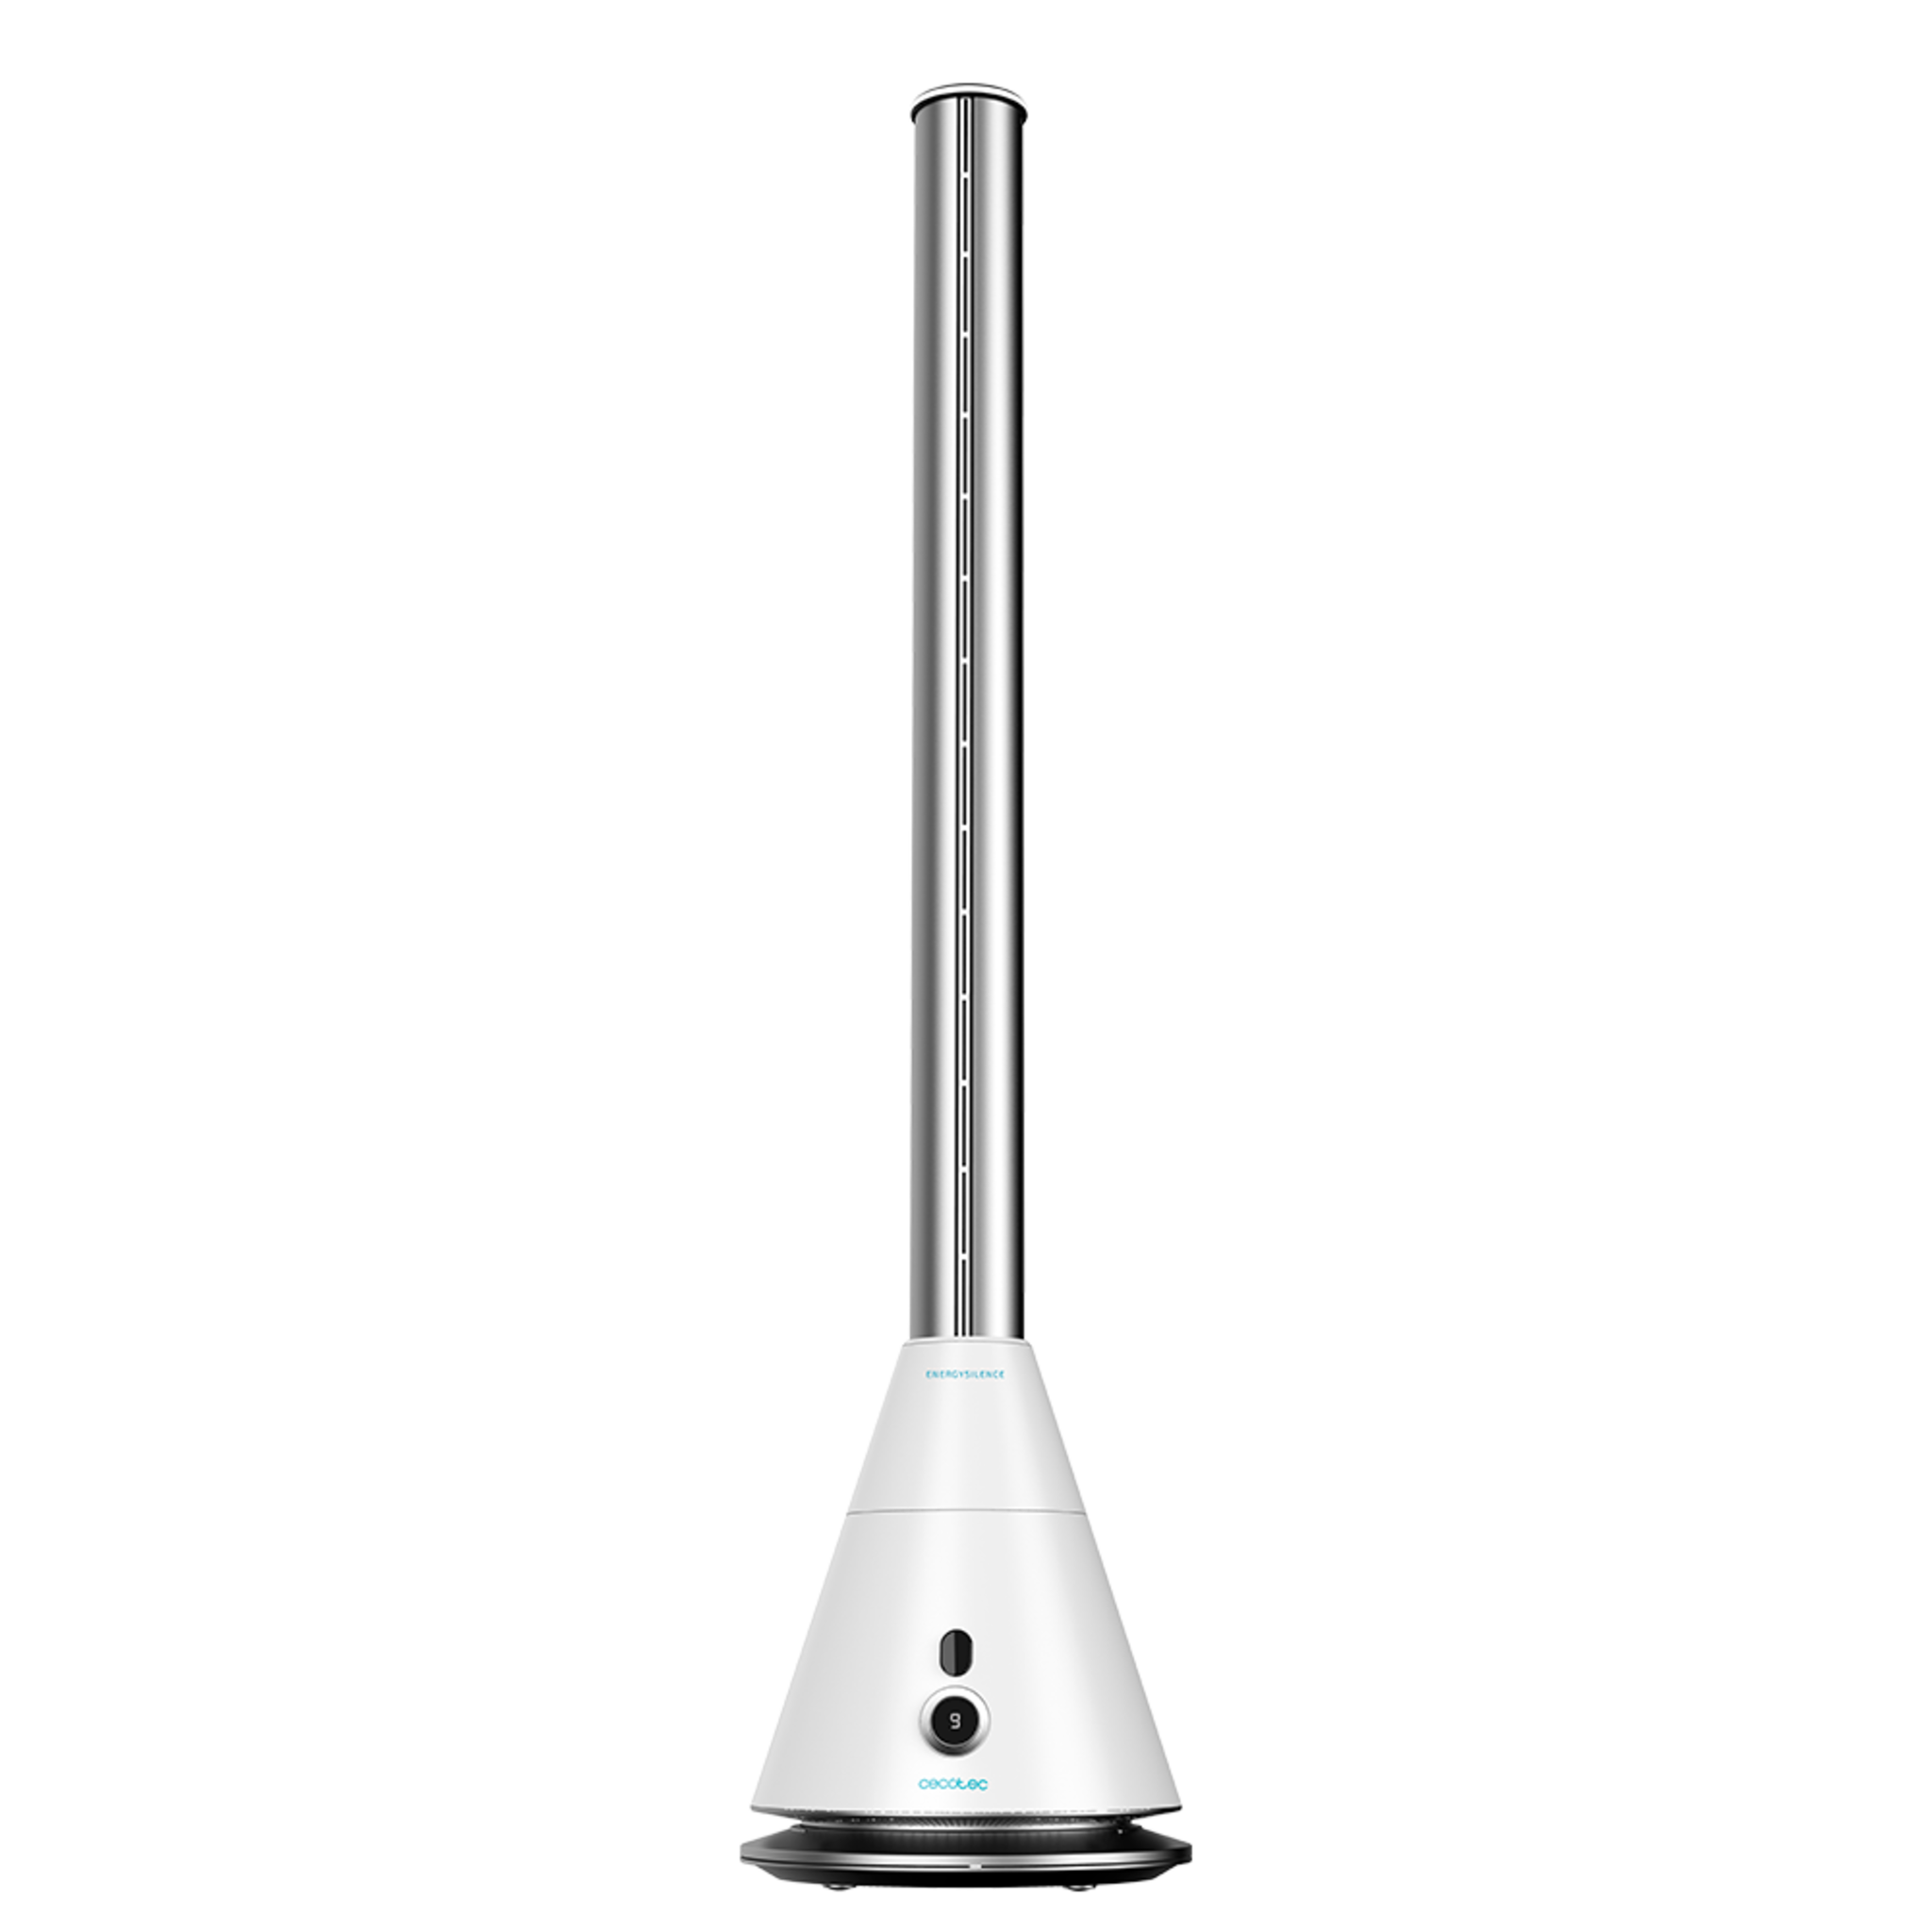 Ventilador de Torre sin Aspas con Mando a Distancia y Temporizador EnergySilence 9800 Skyline Bladeless White. 26 W, 38" (96 cm) de Altura, Motor de Cobre, 9 Velocidades, Blanco